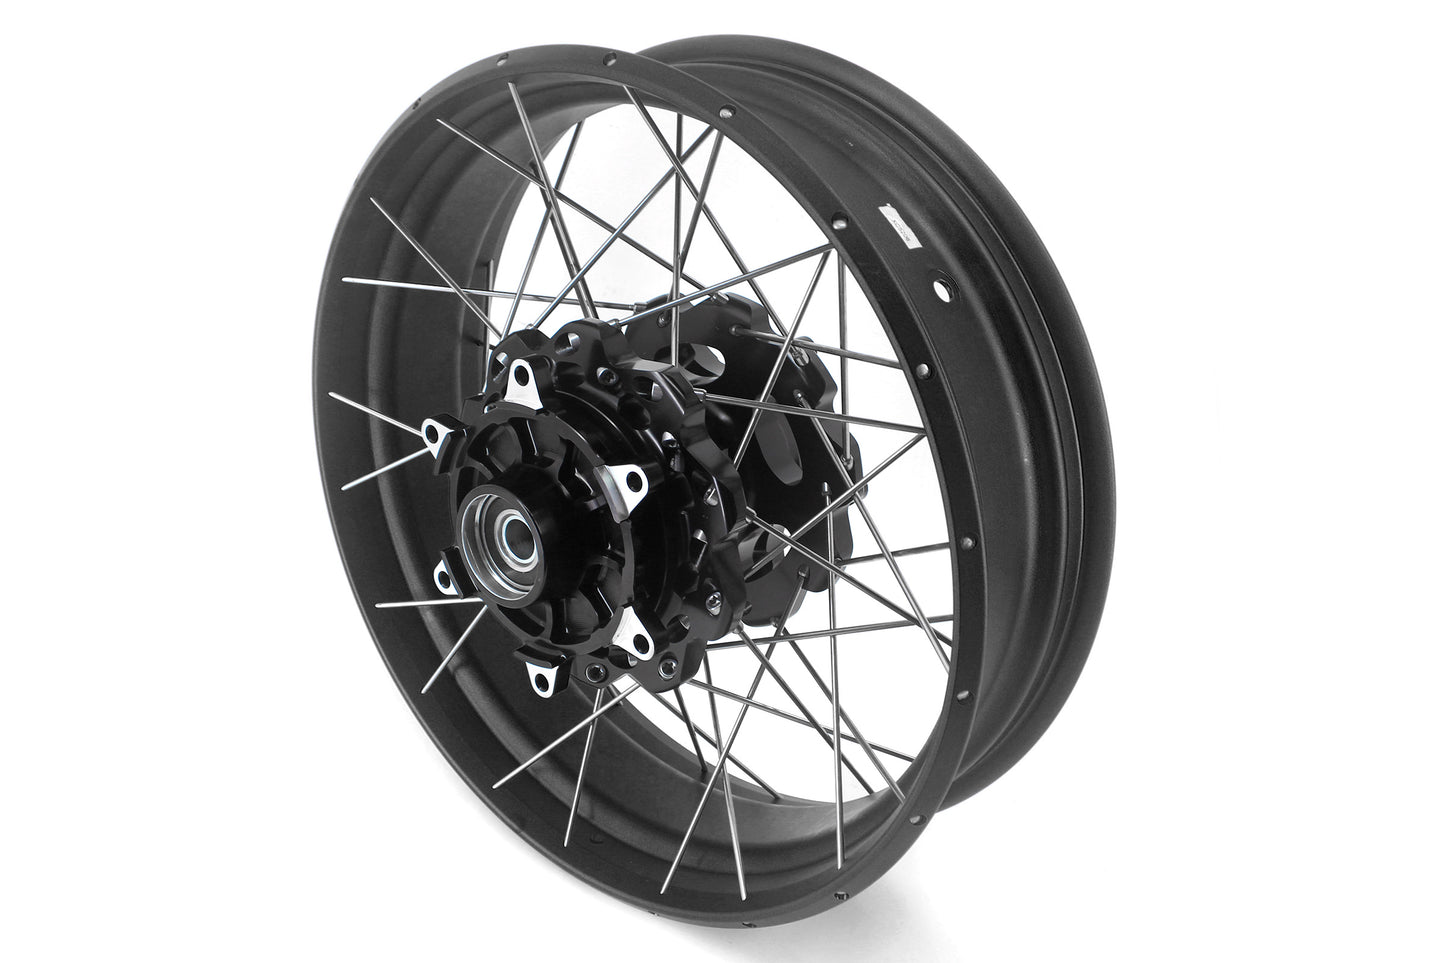 VMX 2.5*19" & 4.25*17" For BMW G310 2016-2023 Cush Drive Tubeless Spoked Wheels Rims